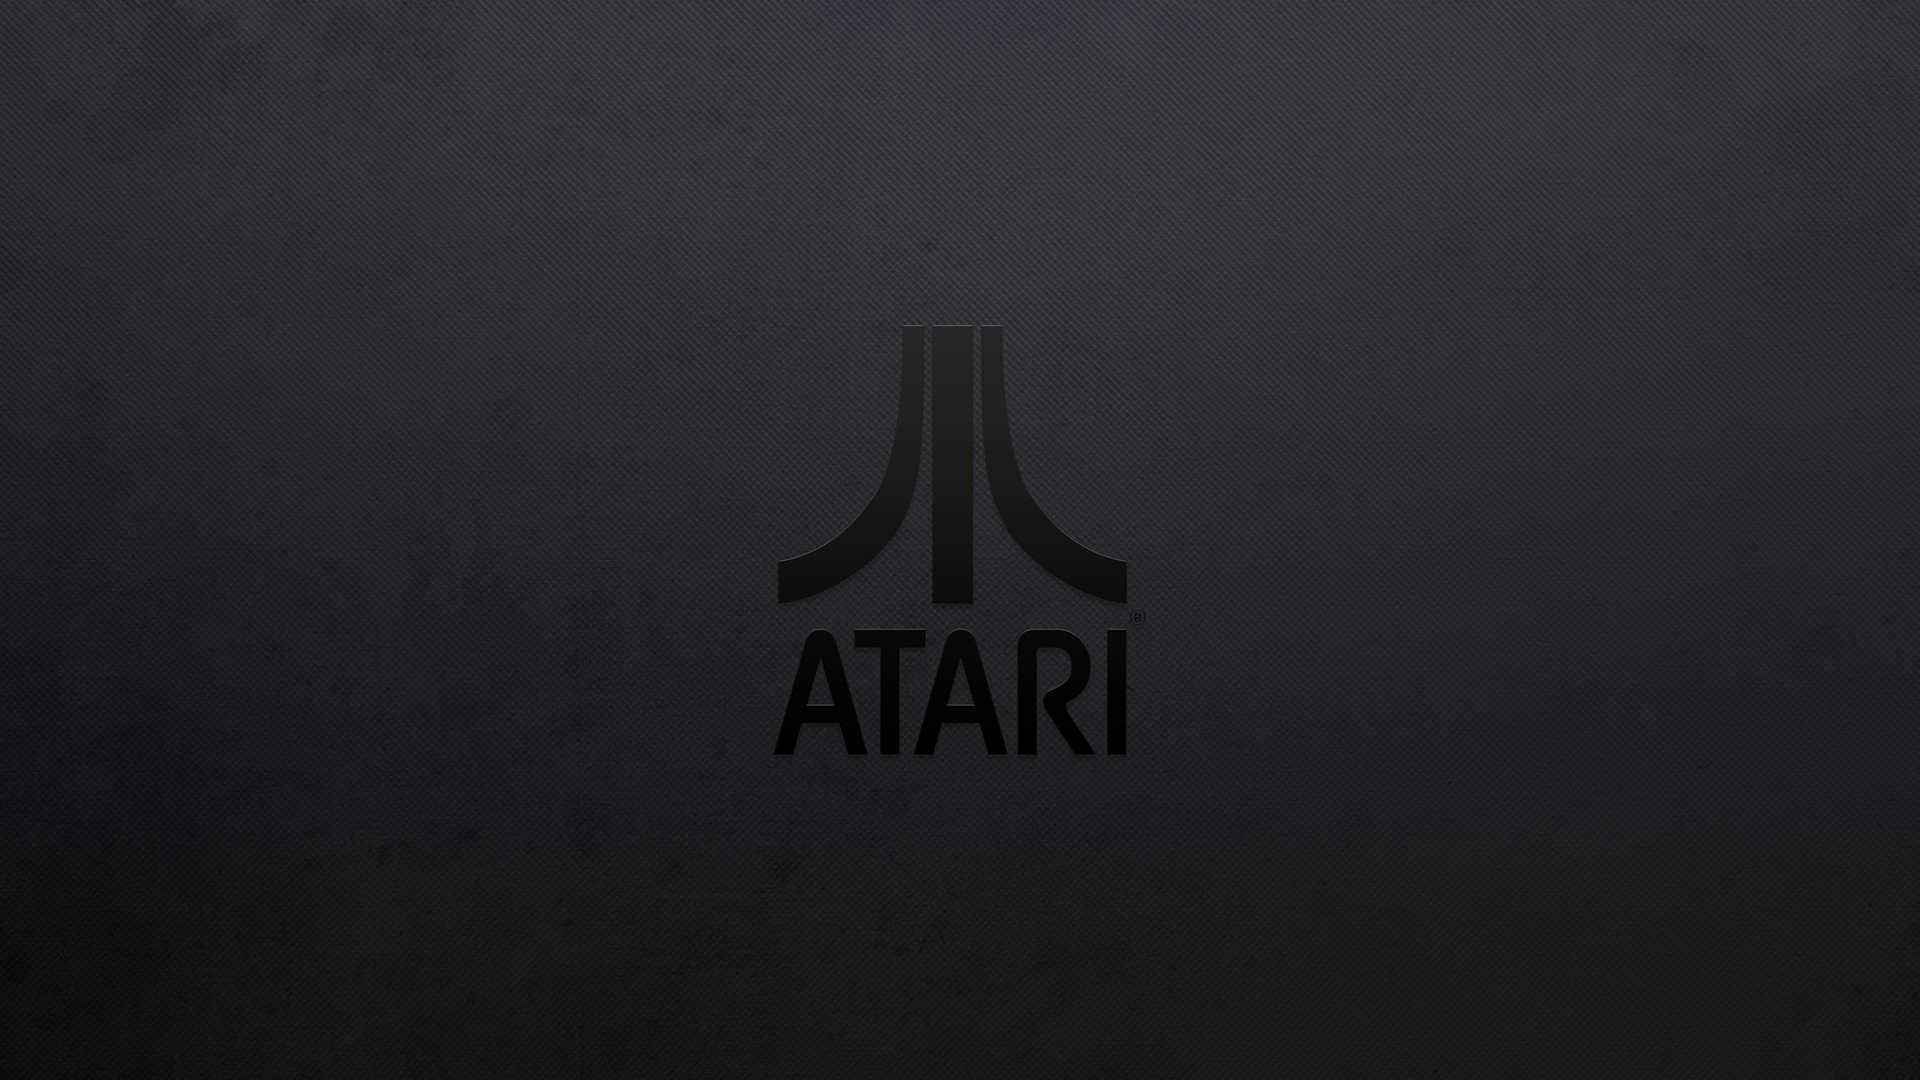 1920x1080 Free Atari Logo Wallpaper